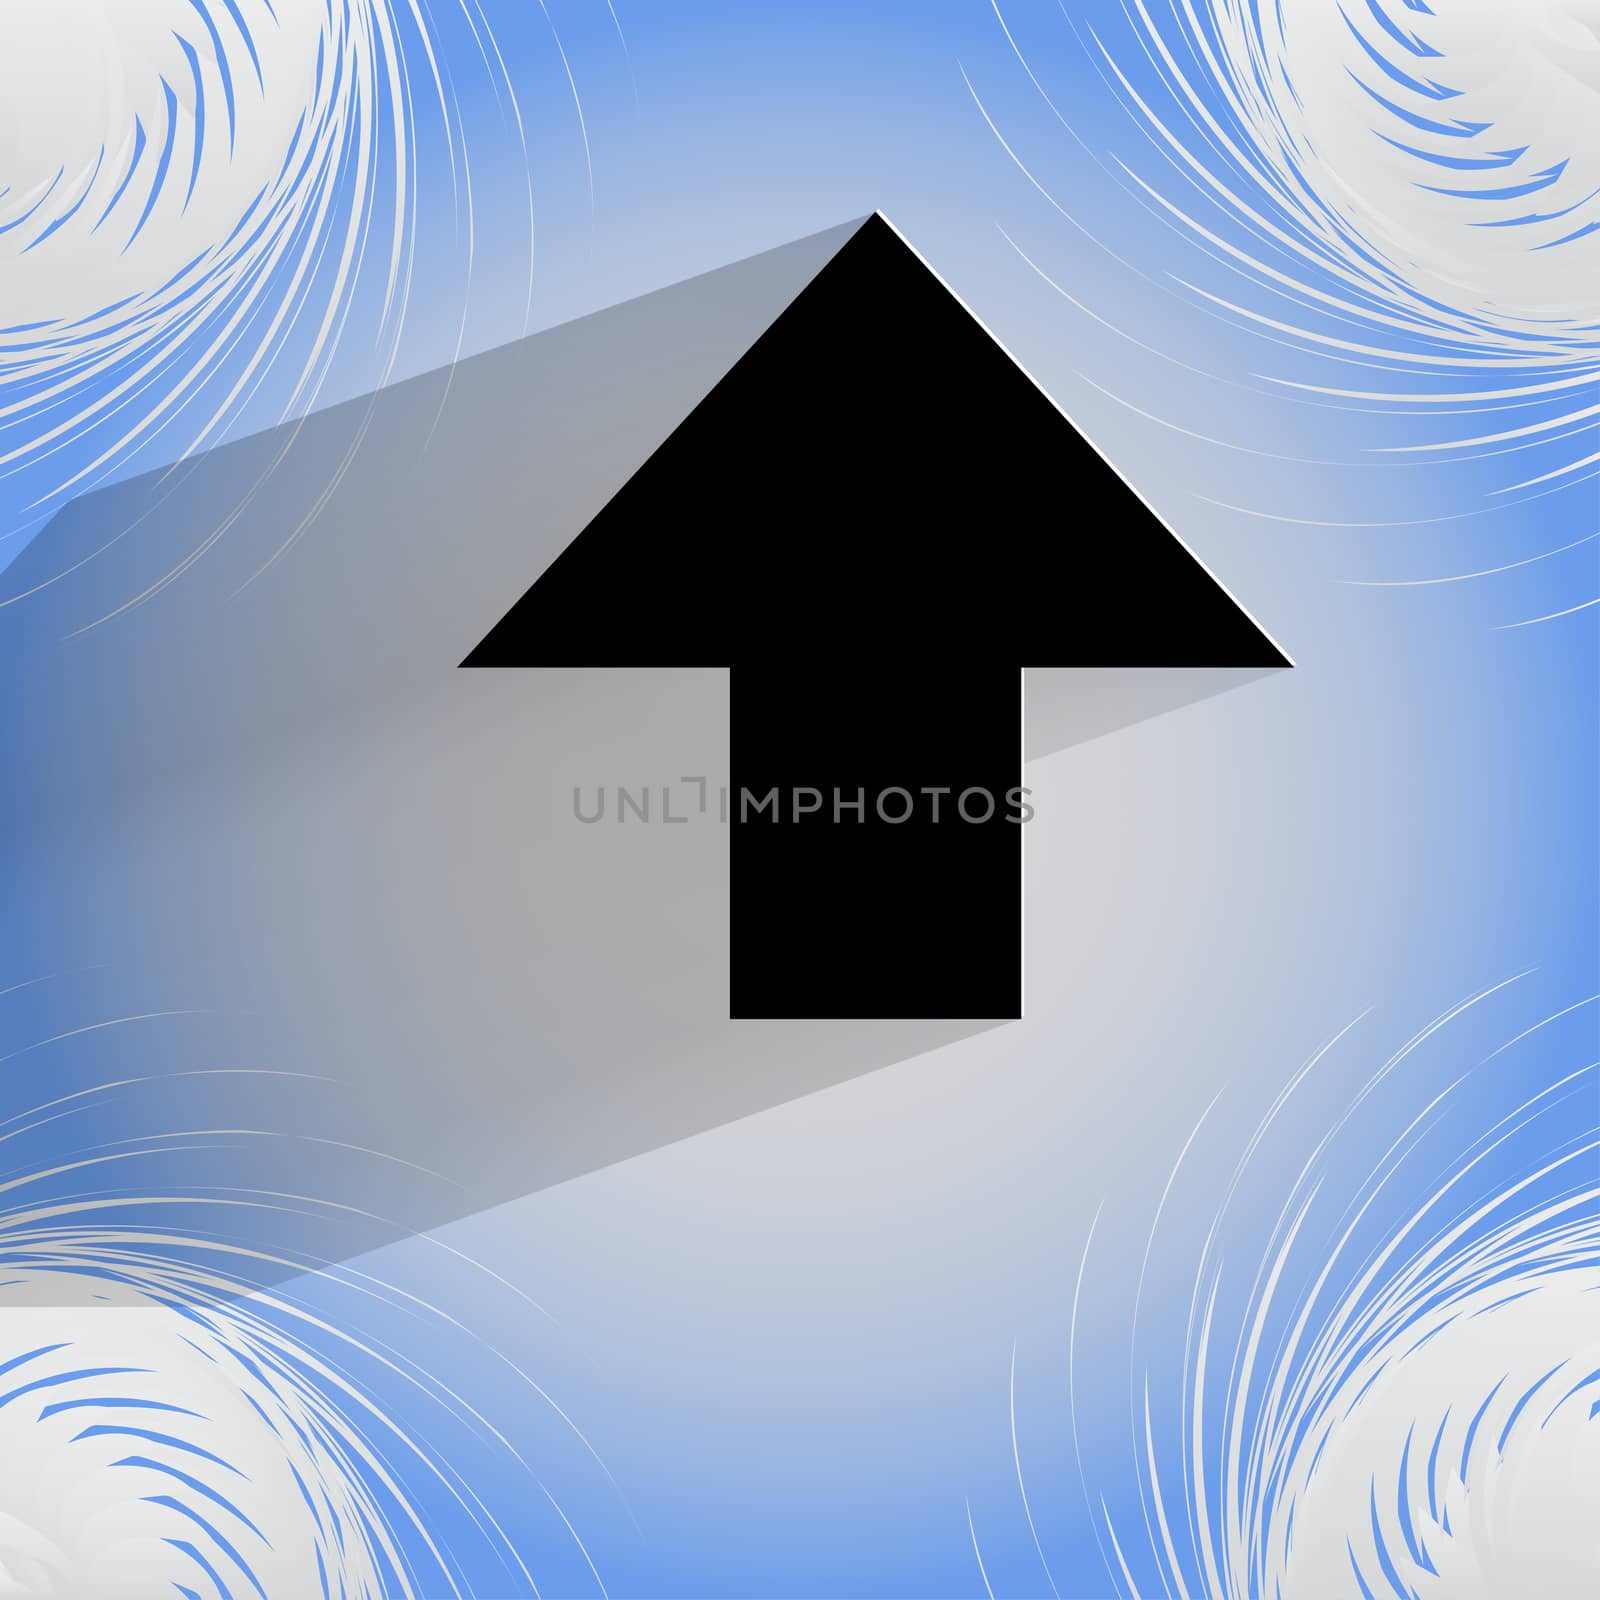 up arrow. Flat modern web design on a flat geometric abstract background  . 